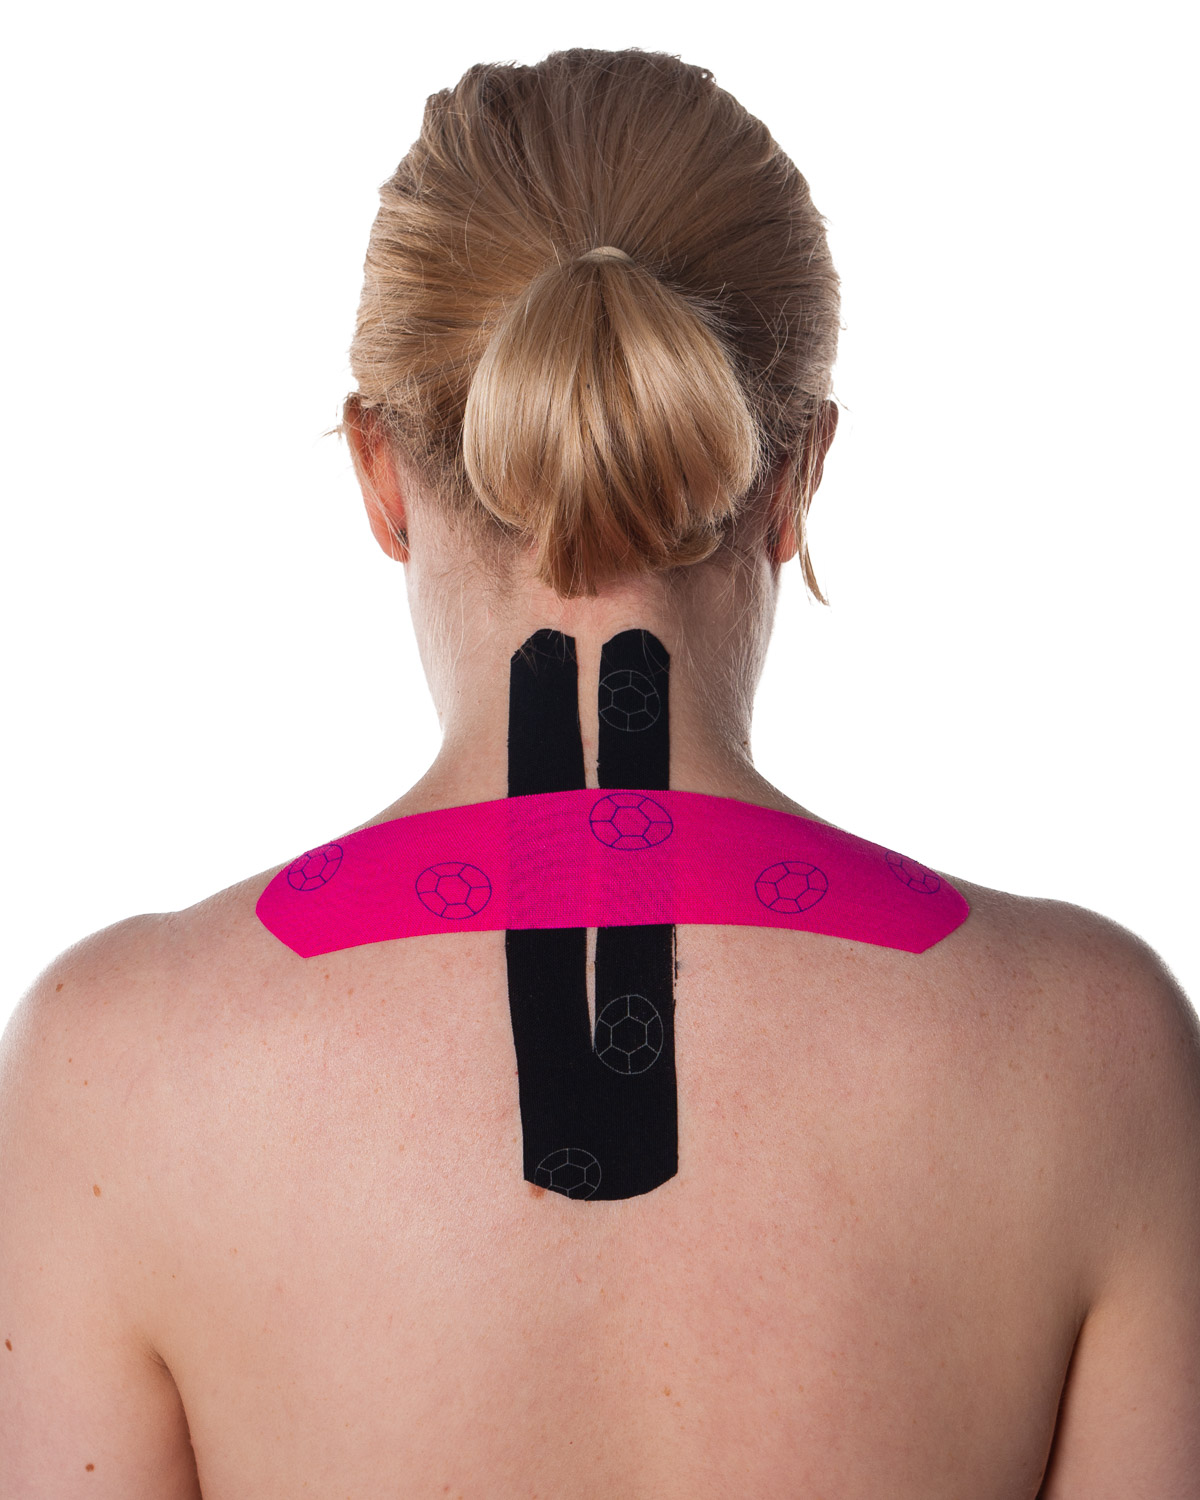 https://blog.physical-sports.co.uk/wp-content/uploads/2015/02/neck-pain-kinesio-taping-basic-3-of-3.jpg